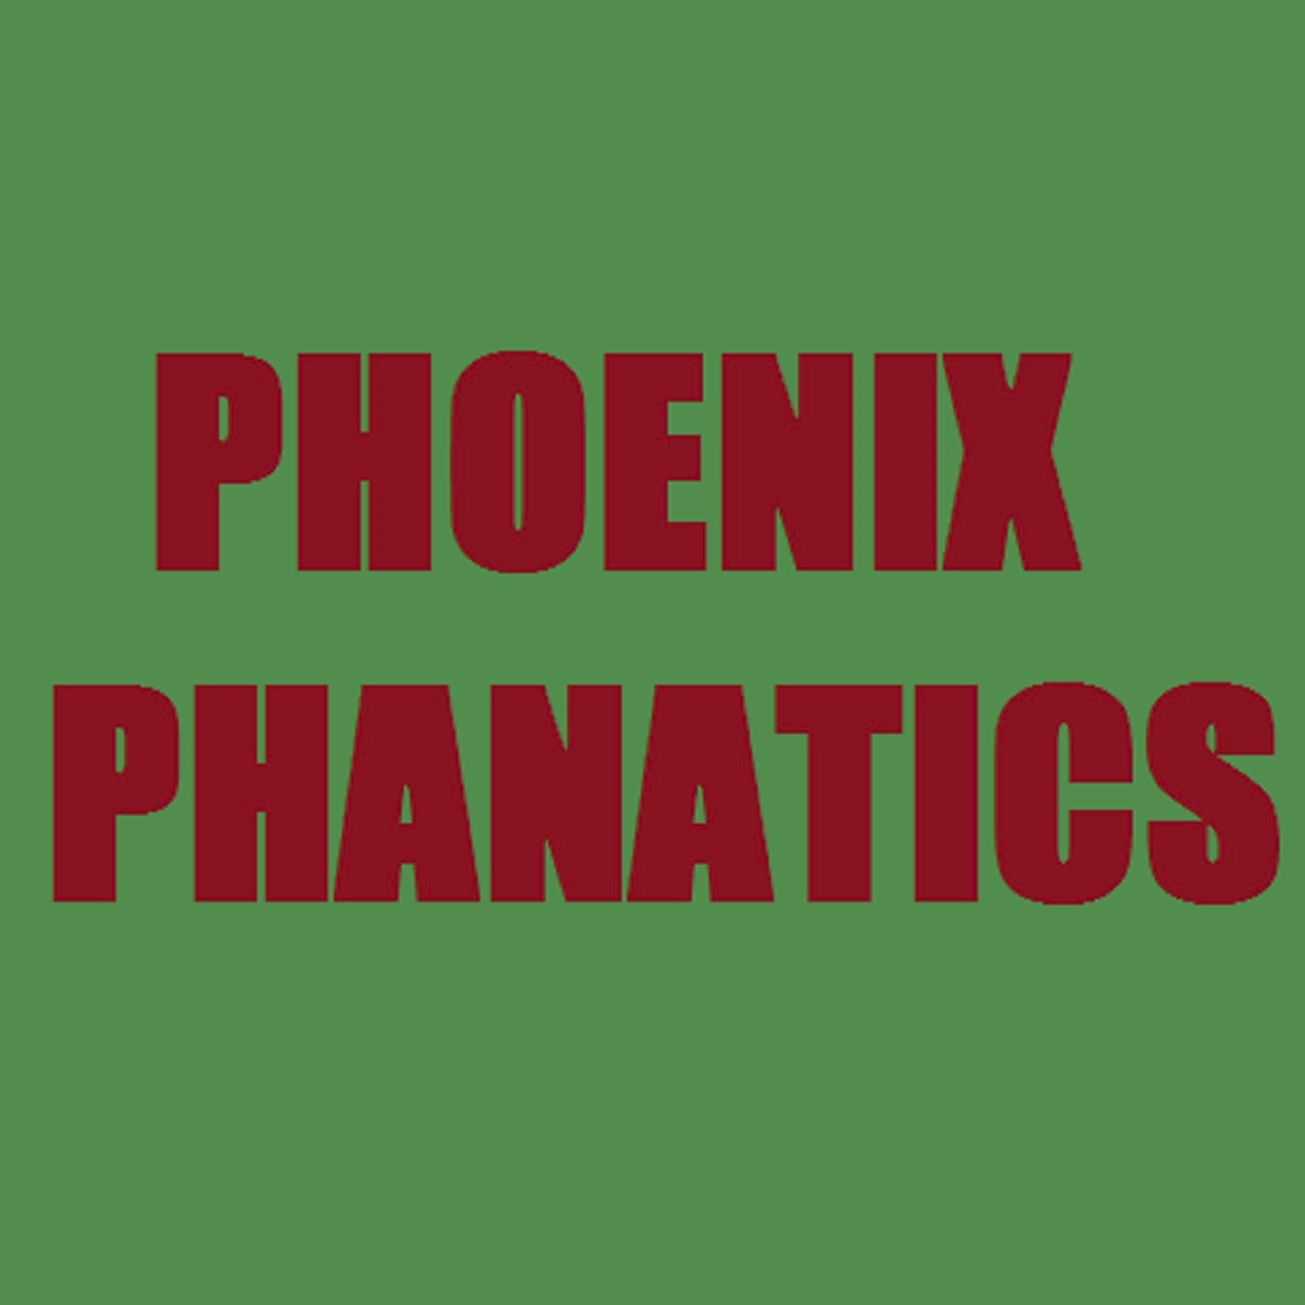 Phoenix Phanatics